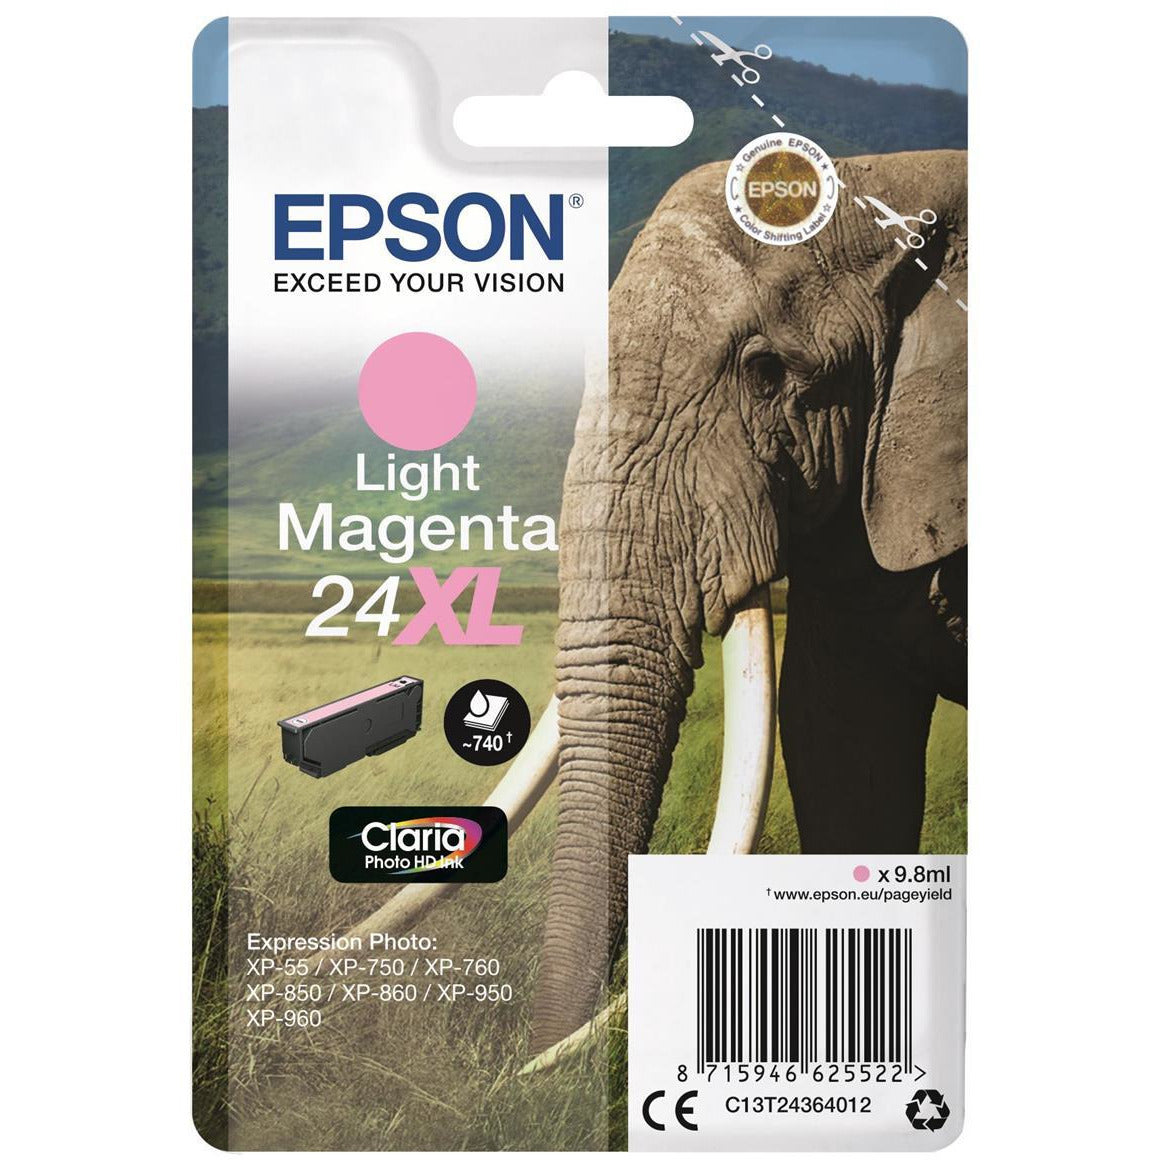 Epson Elephant 24XL (non-Tagged) High Capacity (Prentar 740 síður) blekhylki (Light rautt) fyrir Epson Expression Photo: XP-750 / XP-850